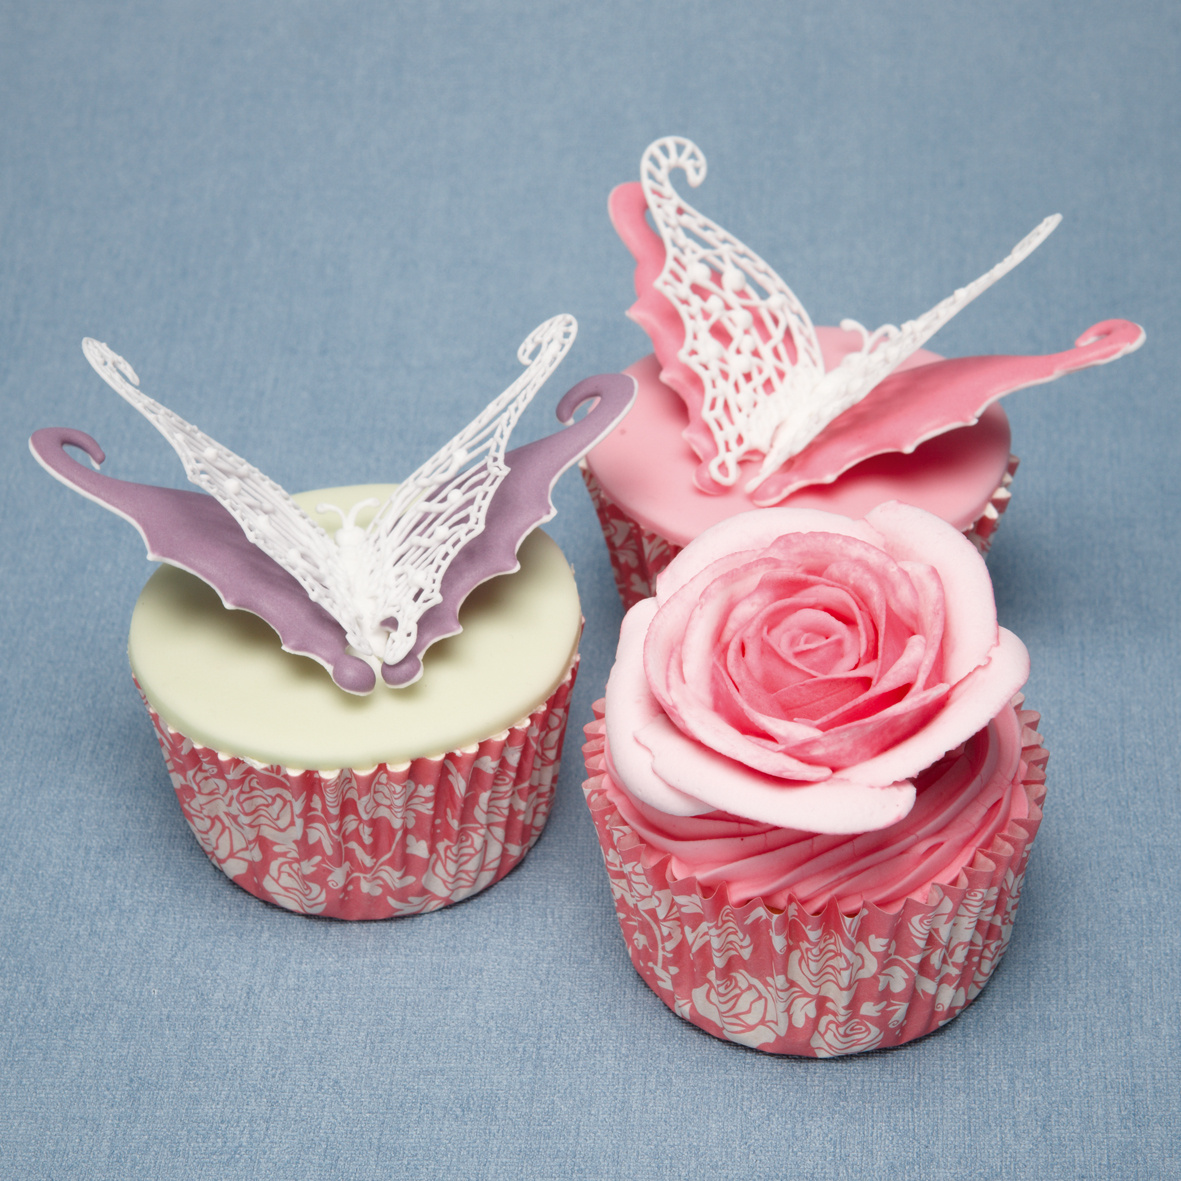 Vivian+rose+cupcakes.jpg